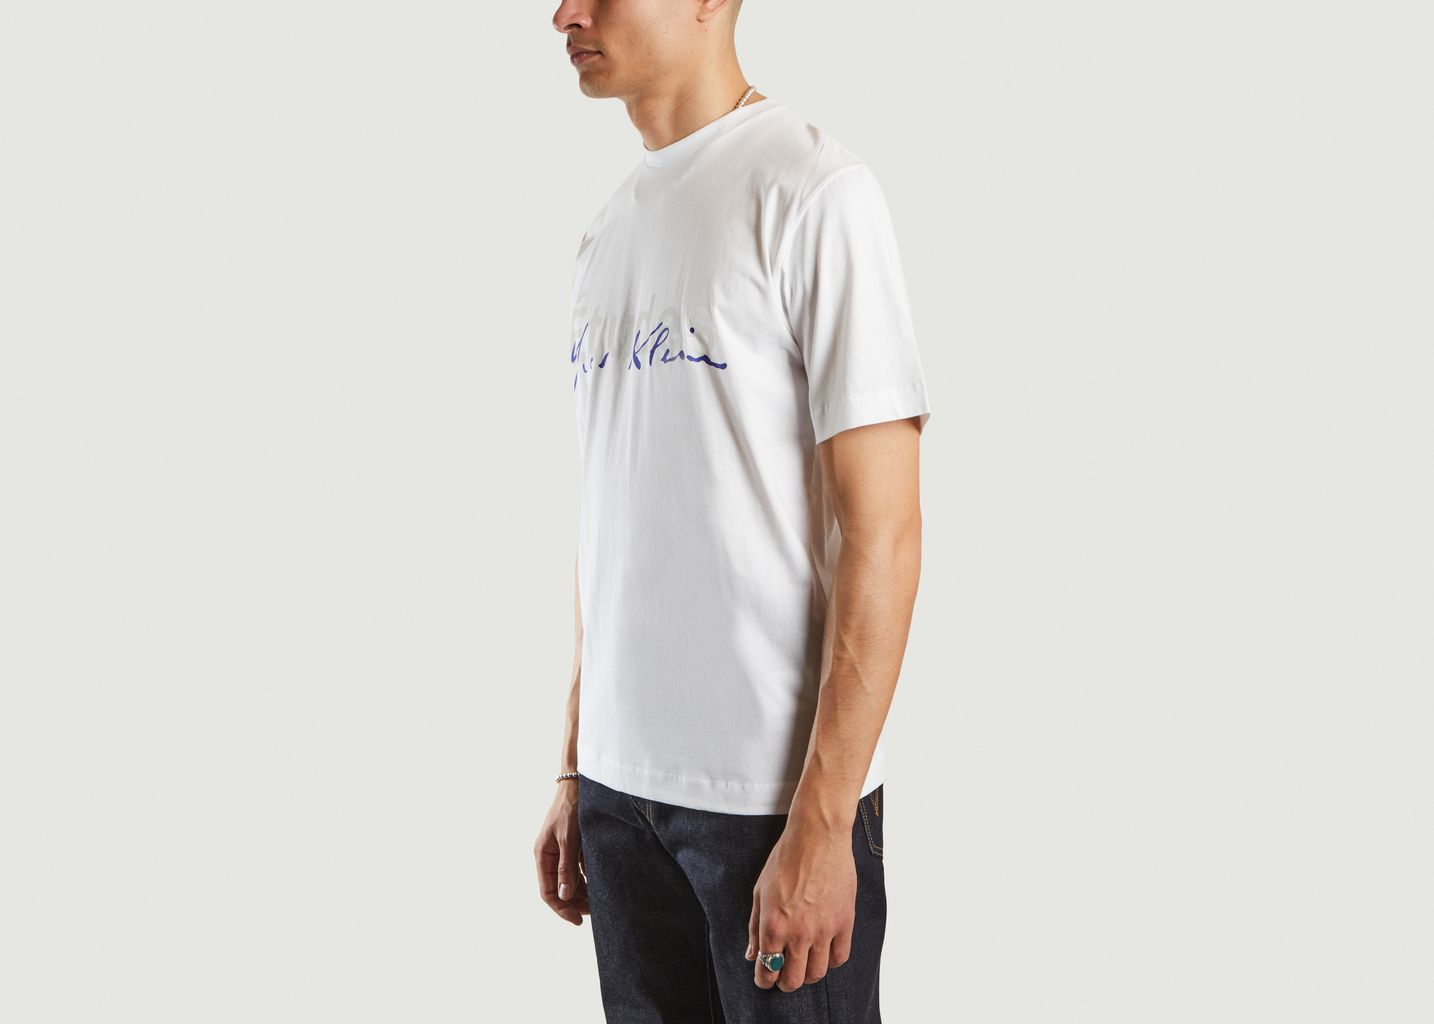 T-shirt Wonder Signature x Yves Klein - Études Studio